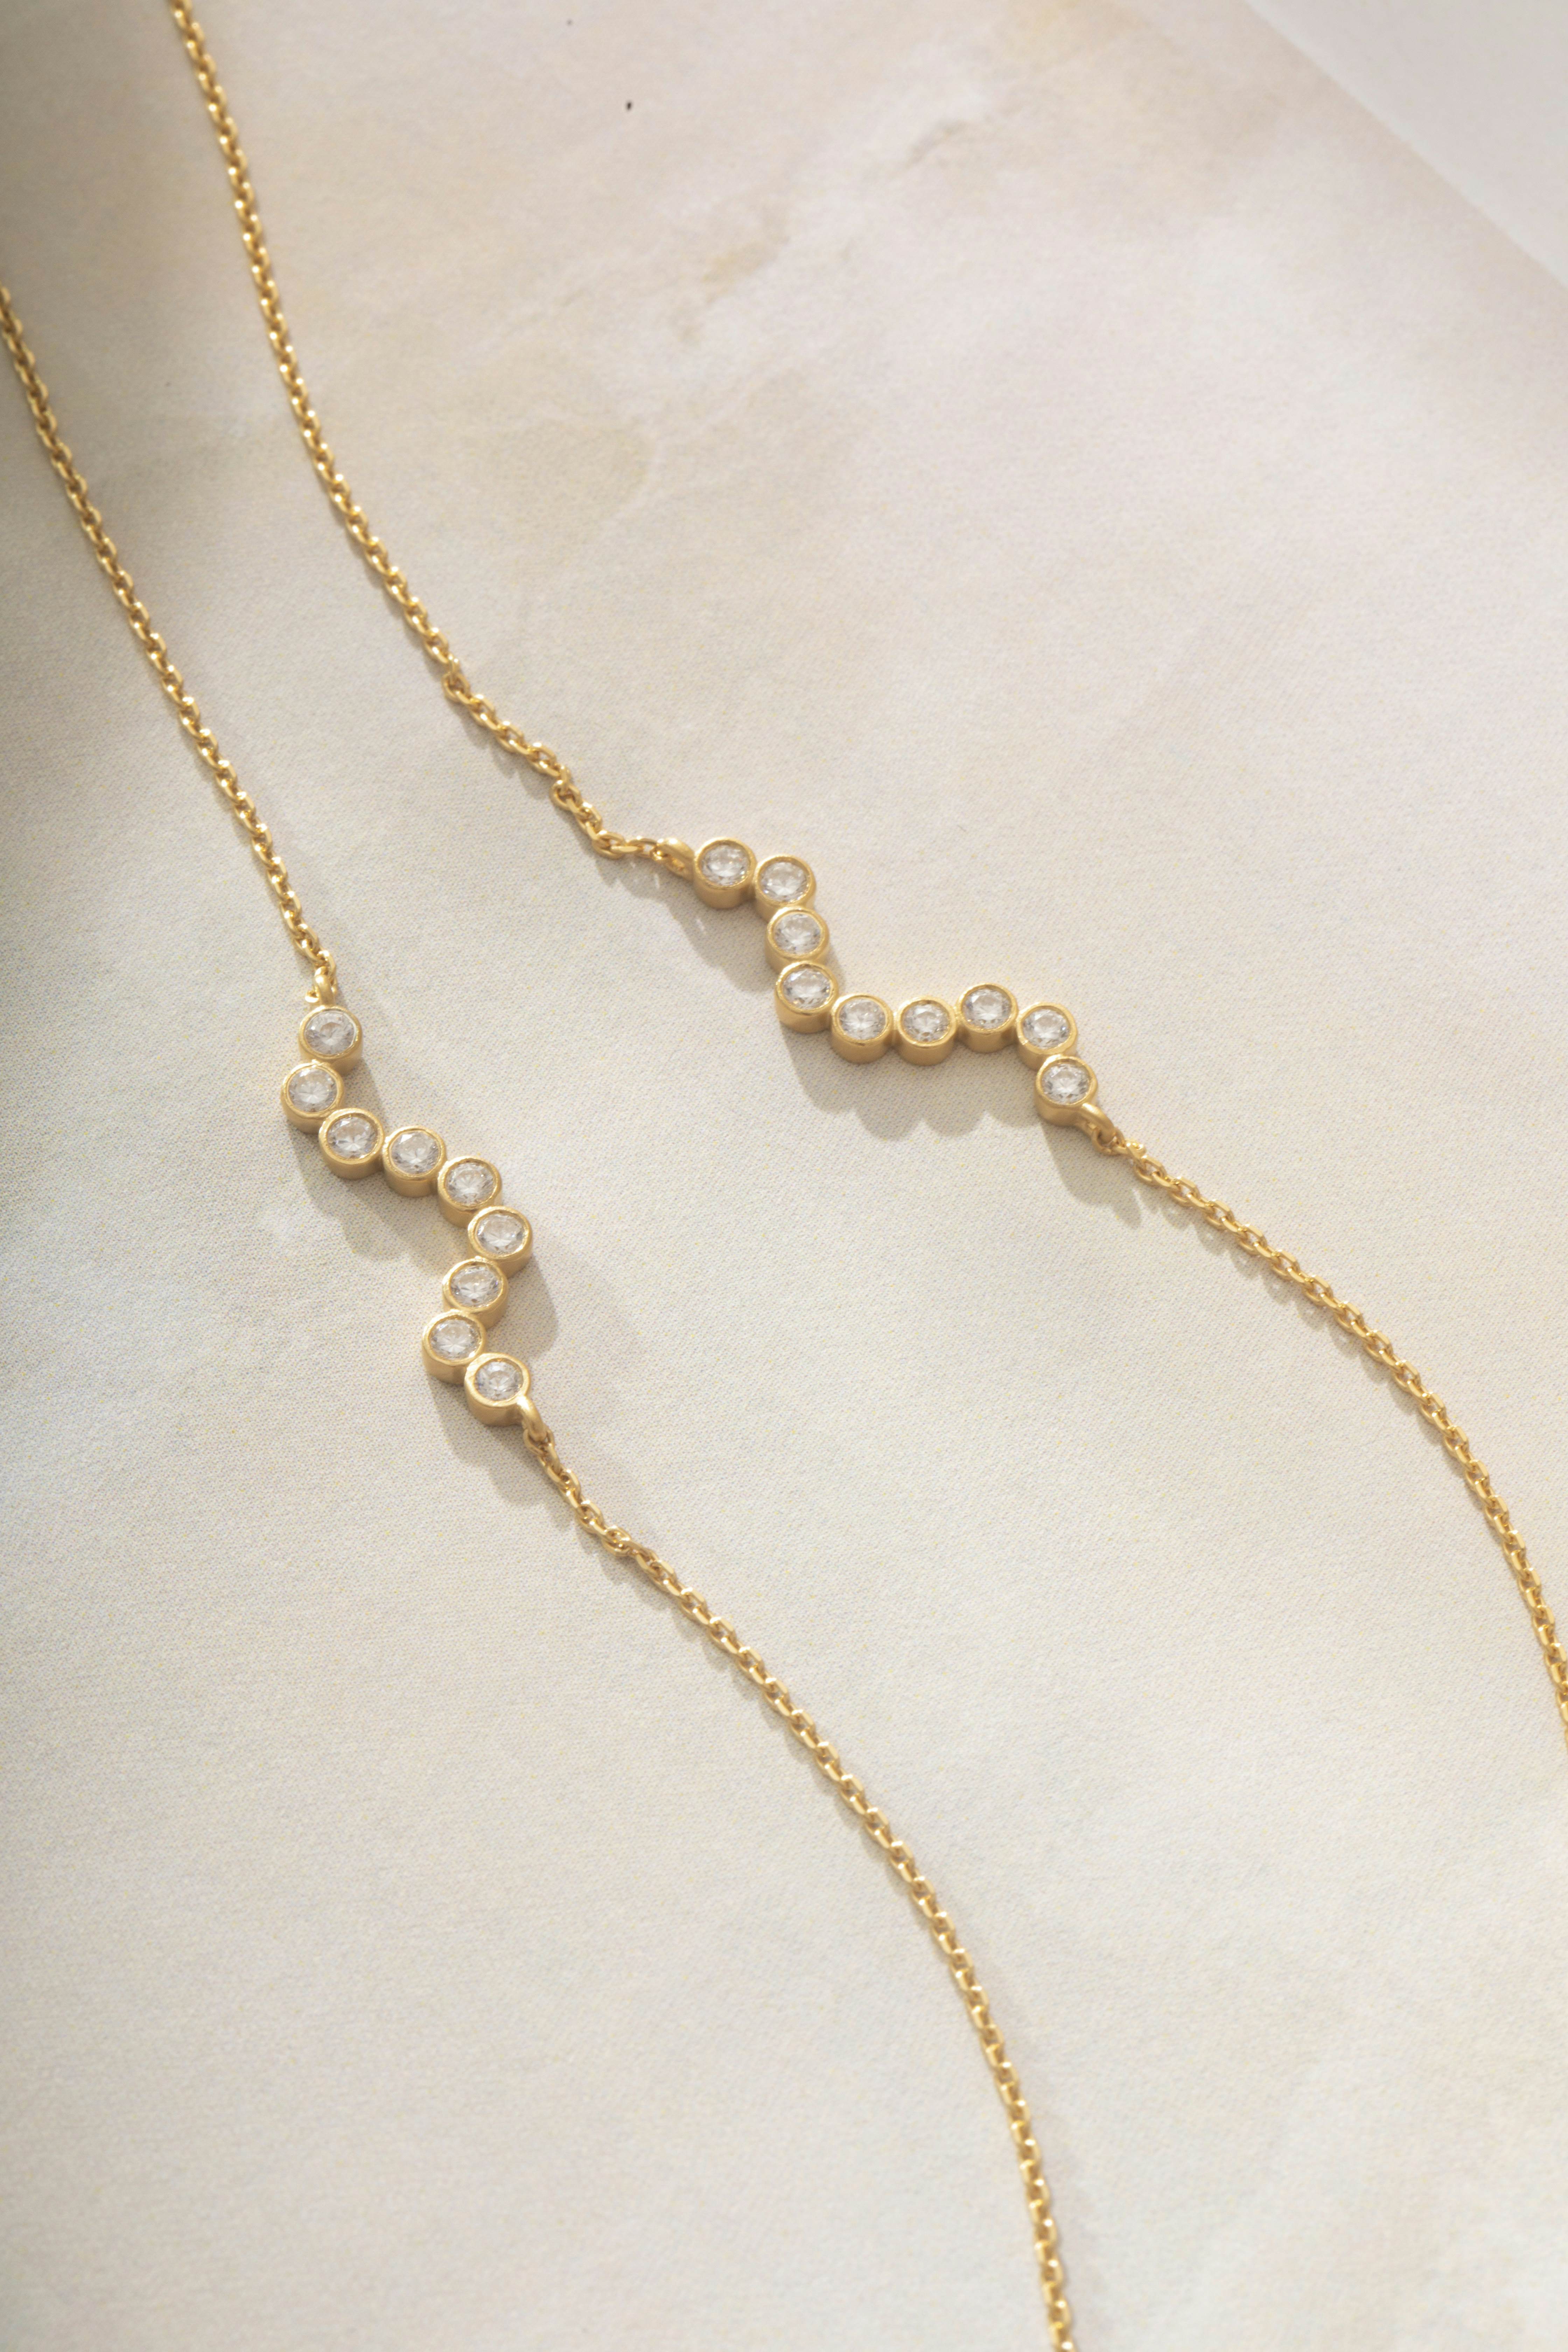 Midnight Sparkle Necklace fra STINE A Jewelry i Forgyldt-Sølv Sterling 925